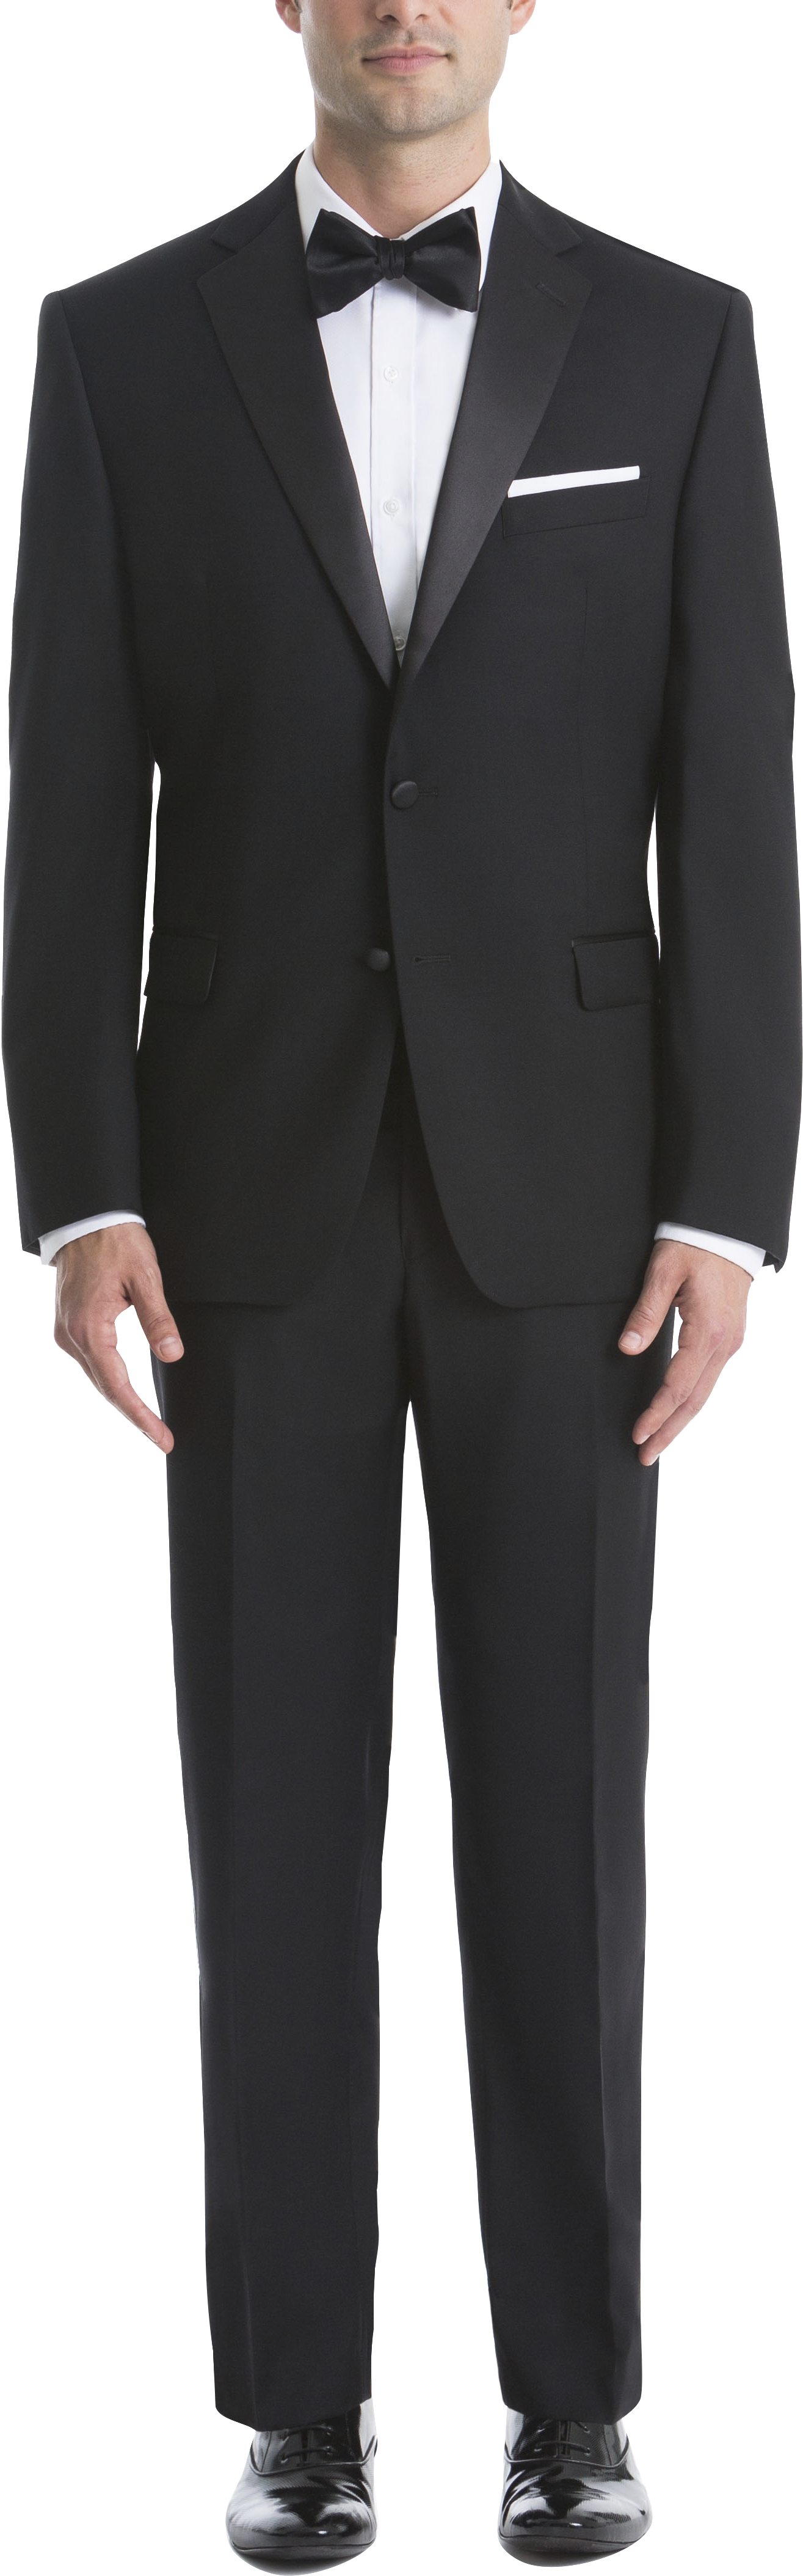 Lauren By Ralph Lauren Classic Fit Suit Separates Tuxedo Coat, Black - Mens Suits - Men's Wearhouse